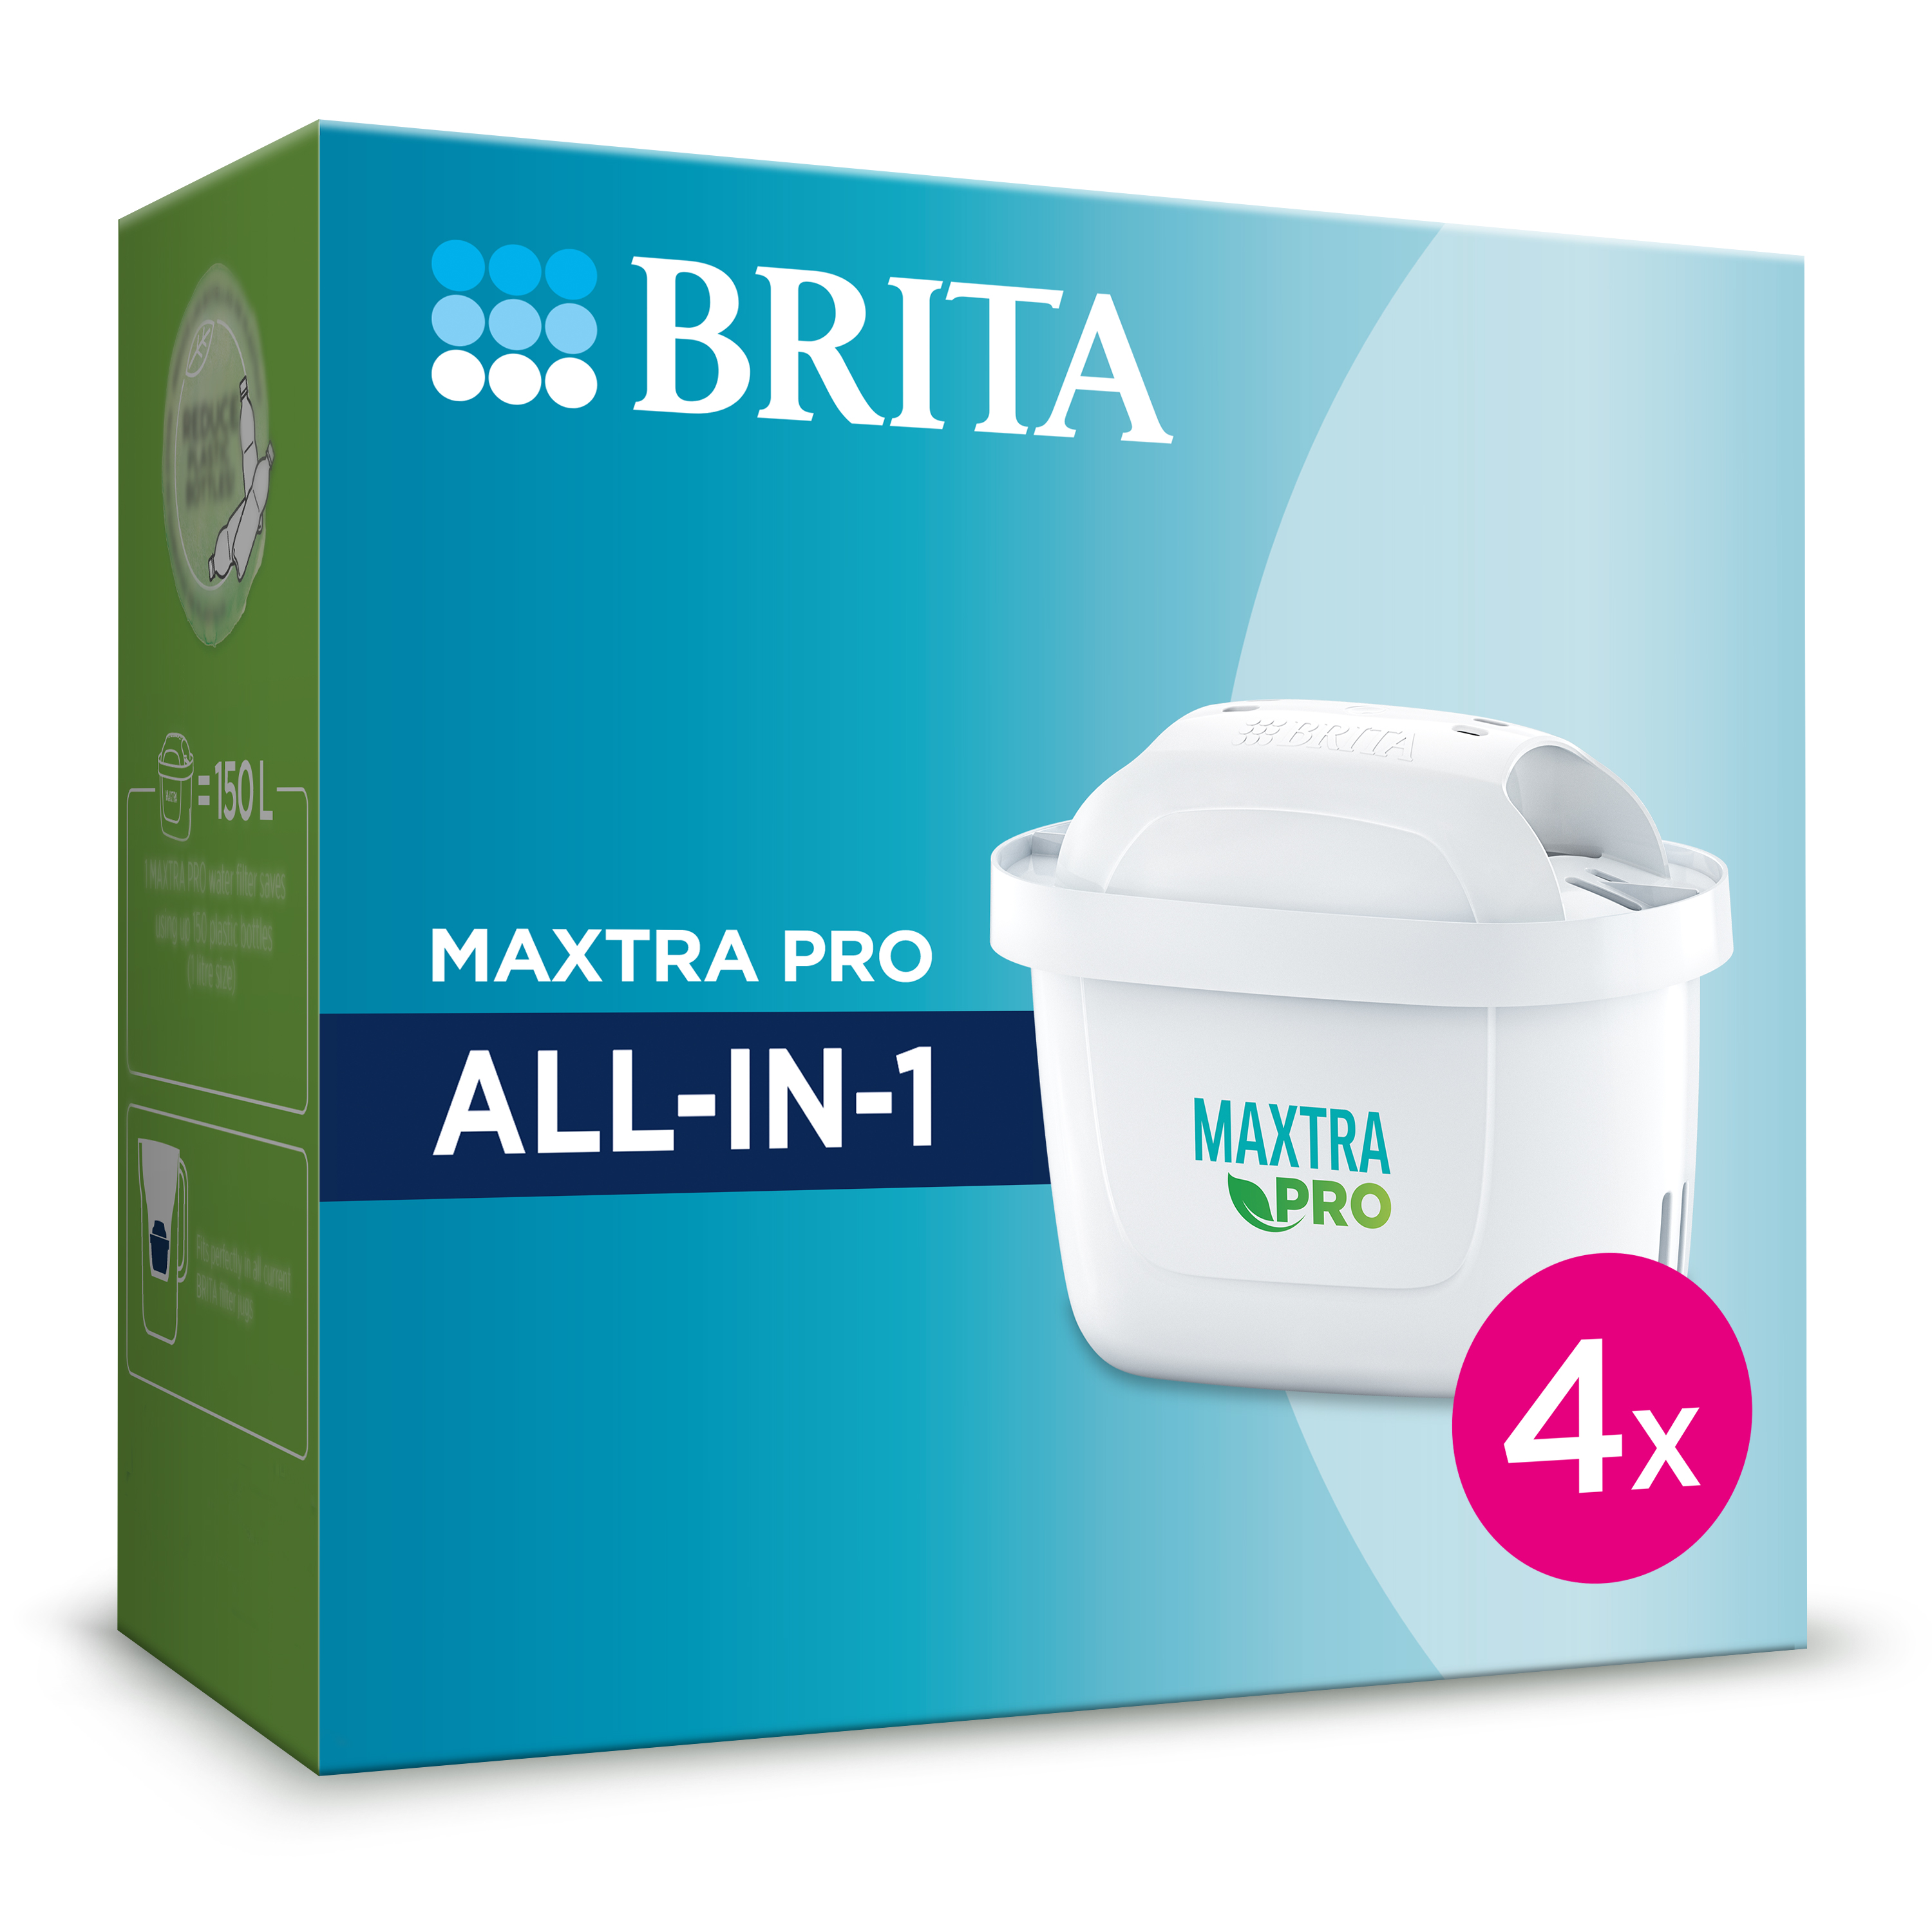 Oferta: jarra filtradora de agua Brita Aluna por 13 euros